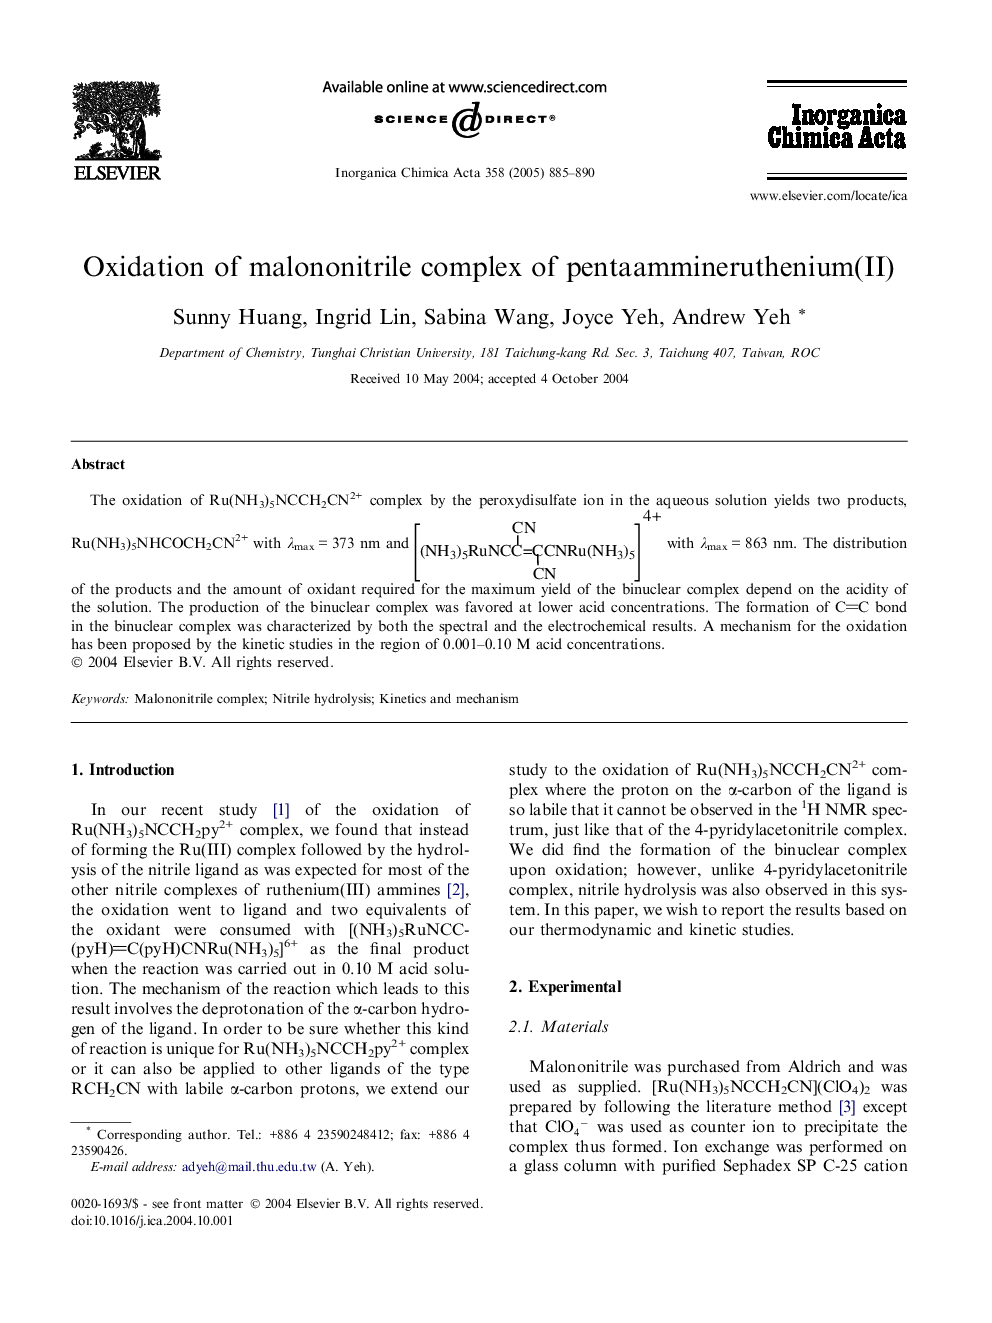 Oxidation of malononitrile complex of pentaammineruthenium(II)